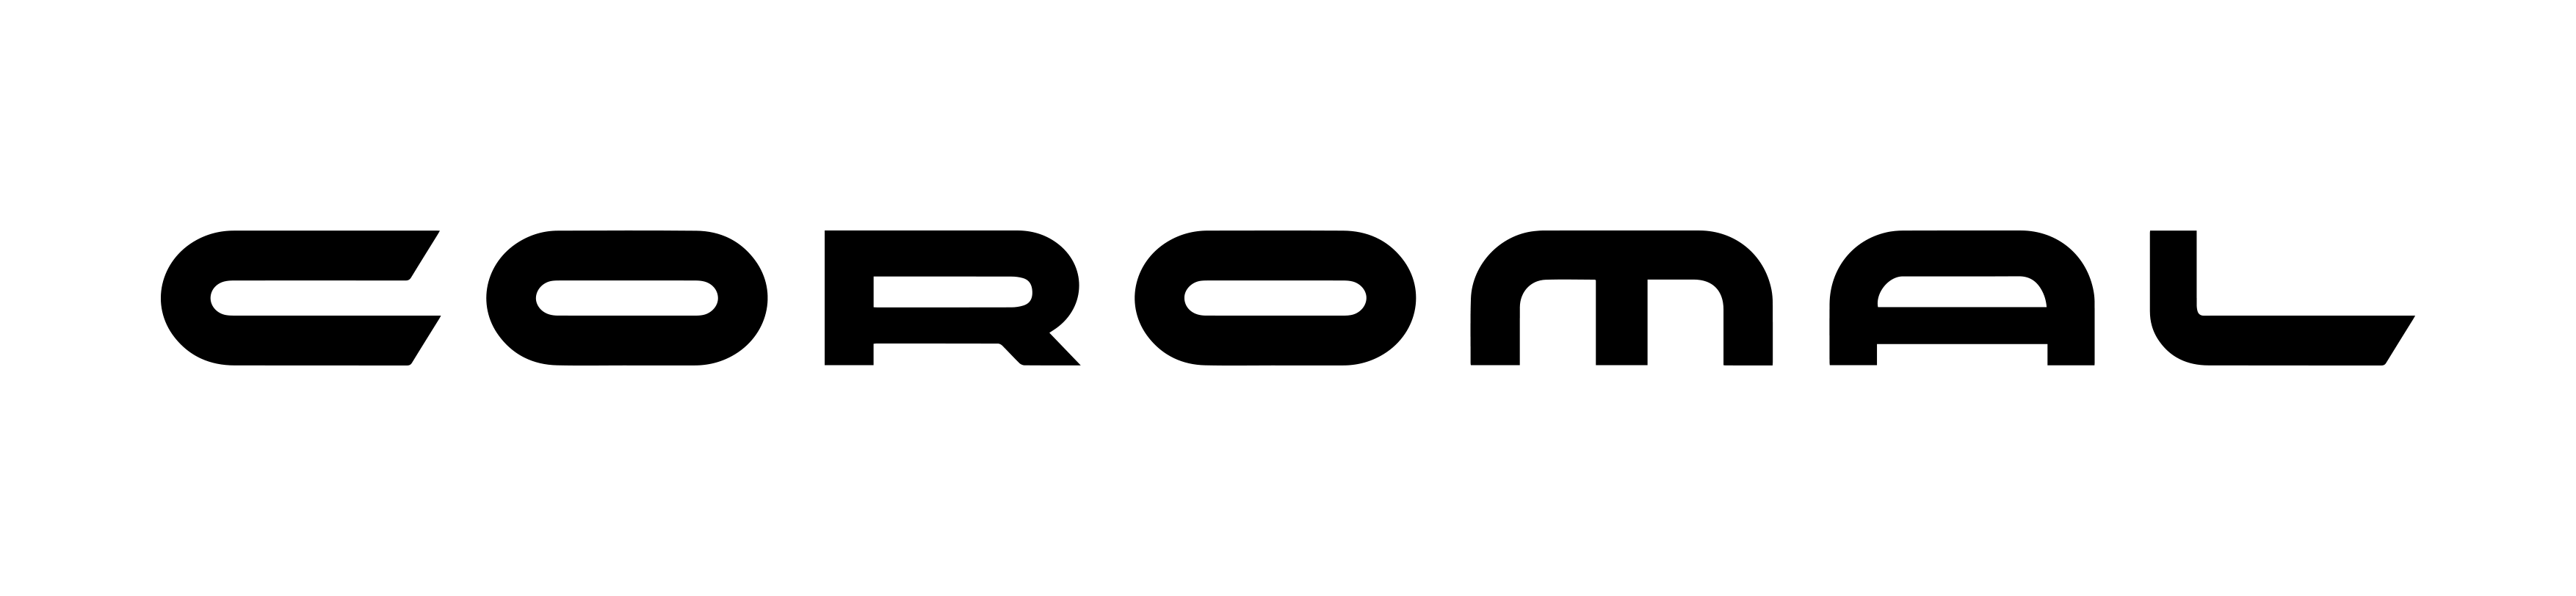 Coromal logo